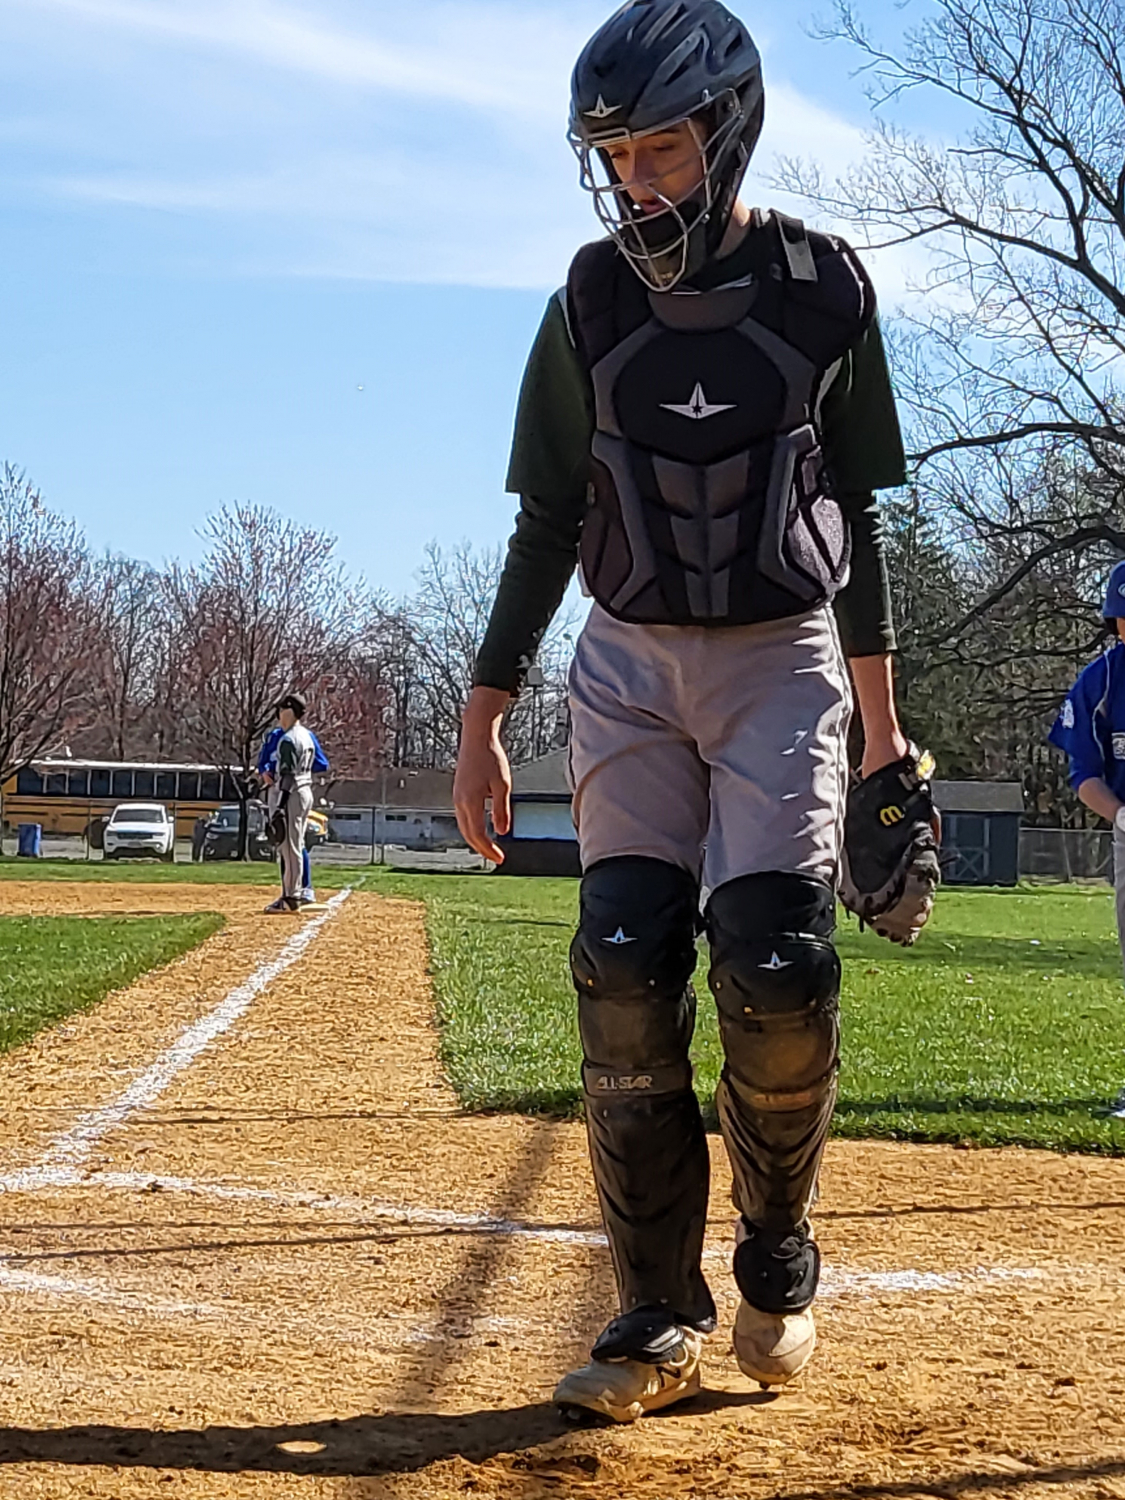 Catcher's Gear for Baseball and Softball